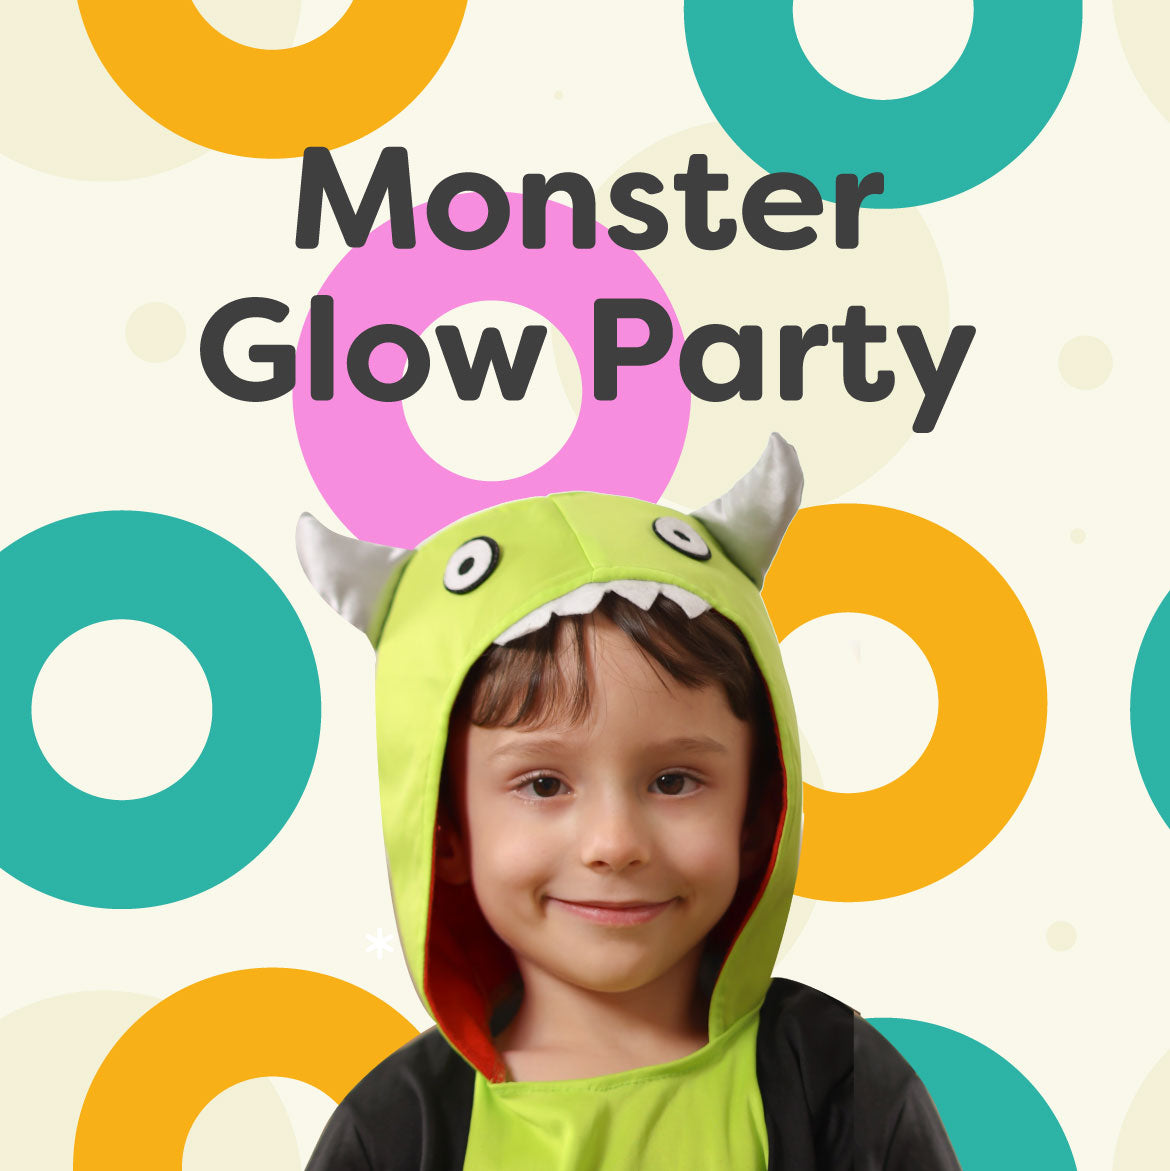 Neon Glow Dark Party Supplies, Neon Paint Party Halloween